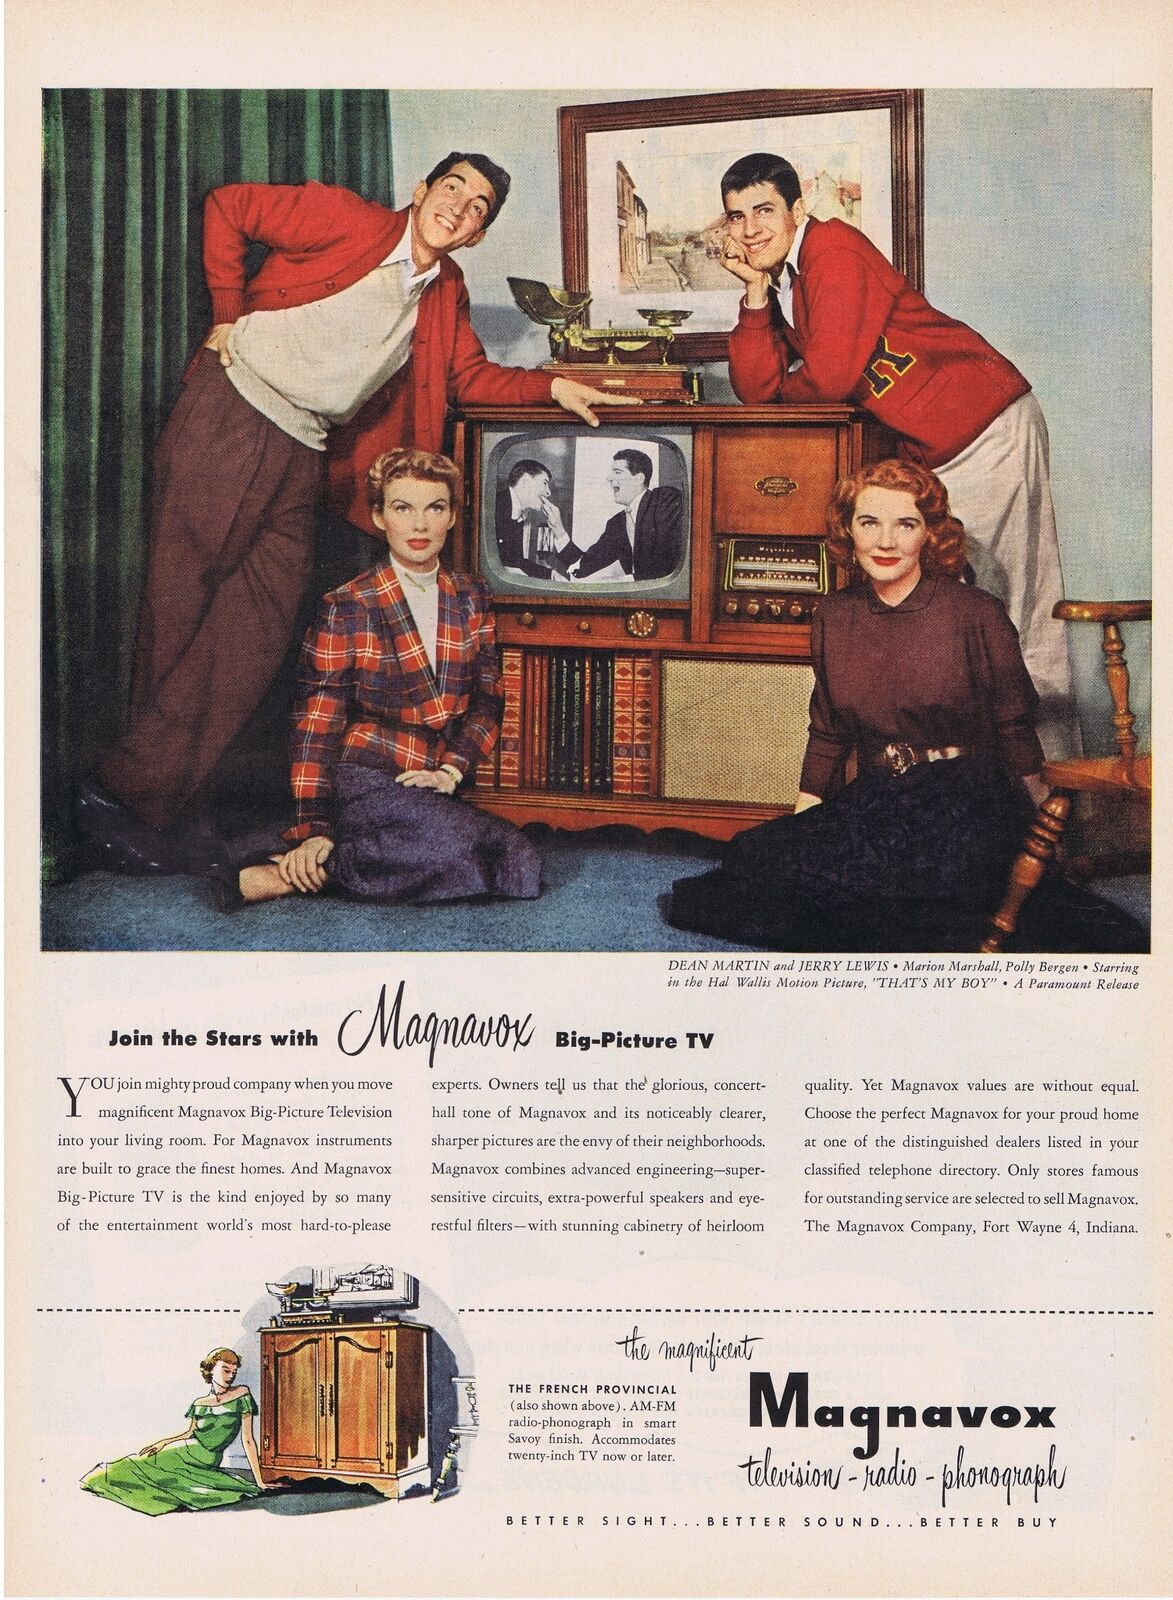 1951-1952 advertisement